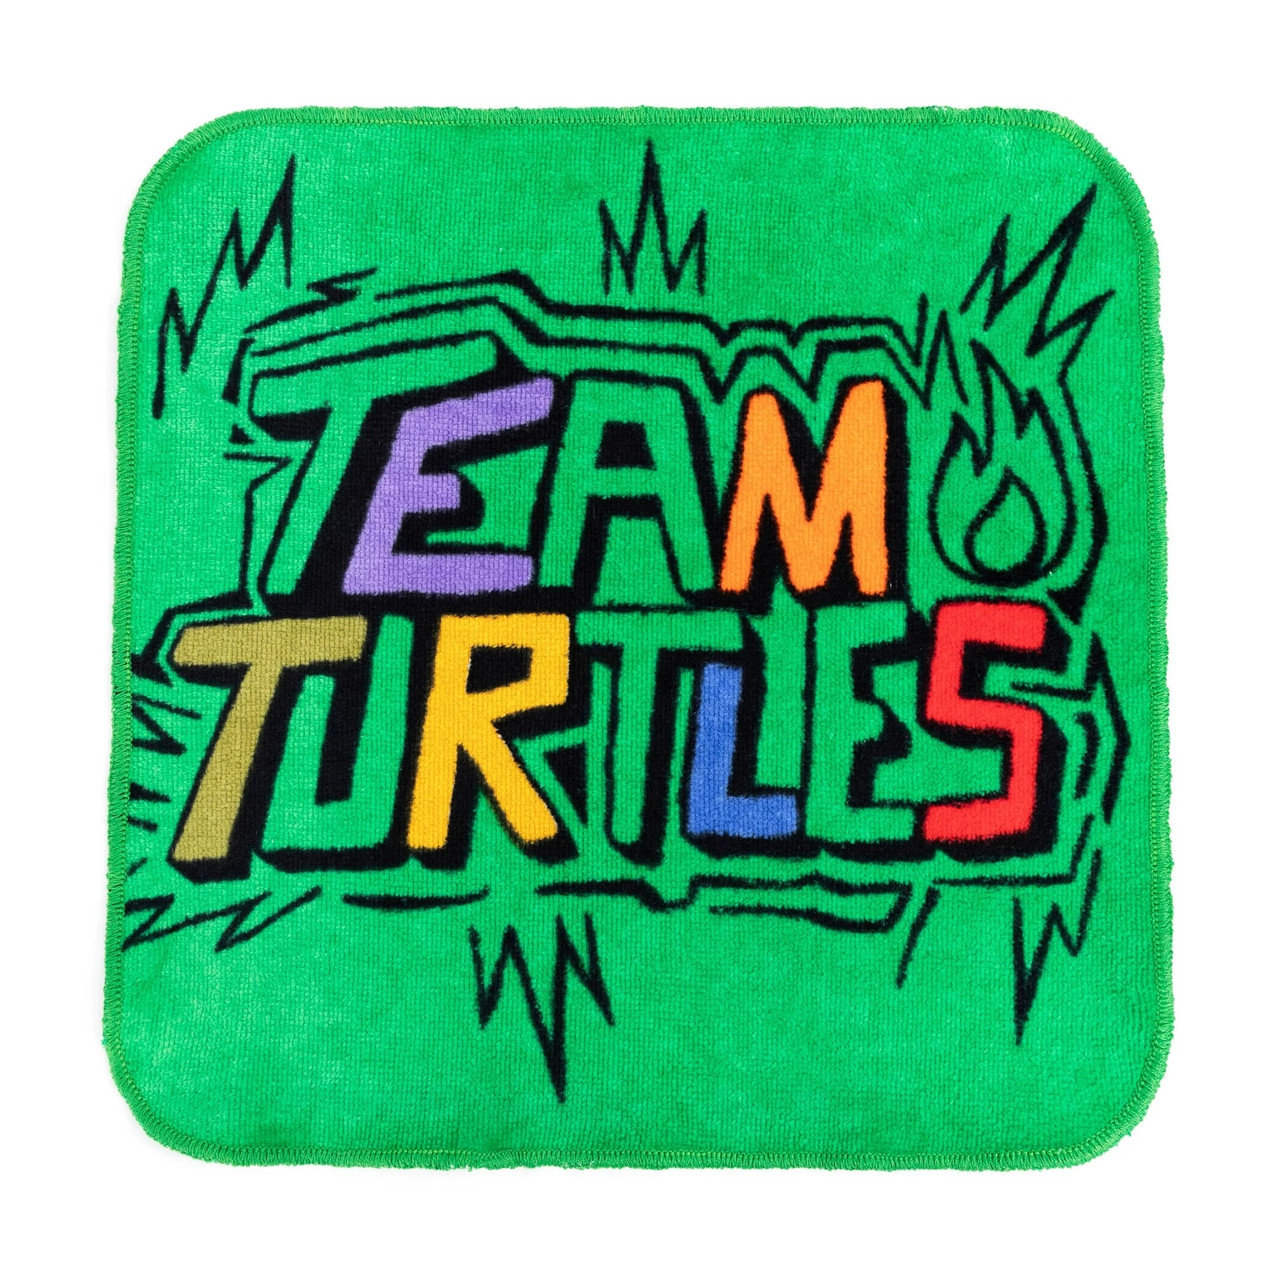 Teenage Mutant Ninja Turtles Heroes Toddler Pajama Shorts Set - Little  Dreamers Pajamas